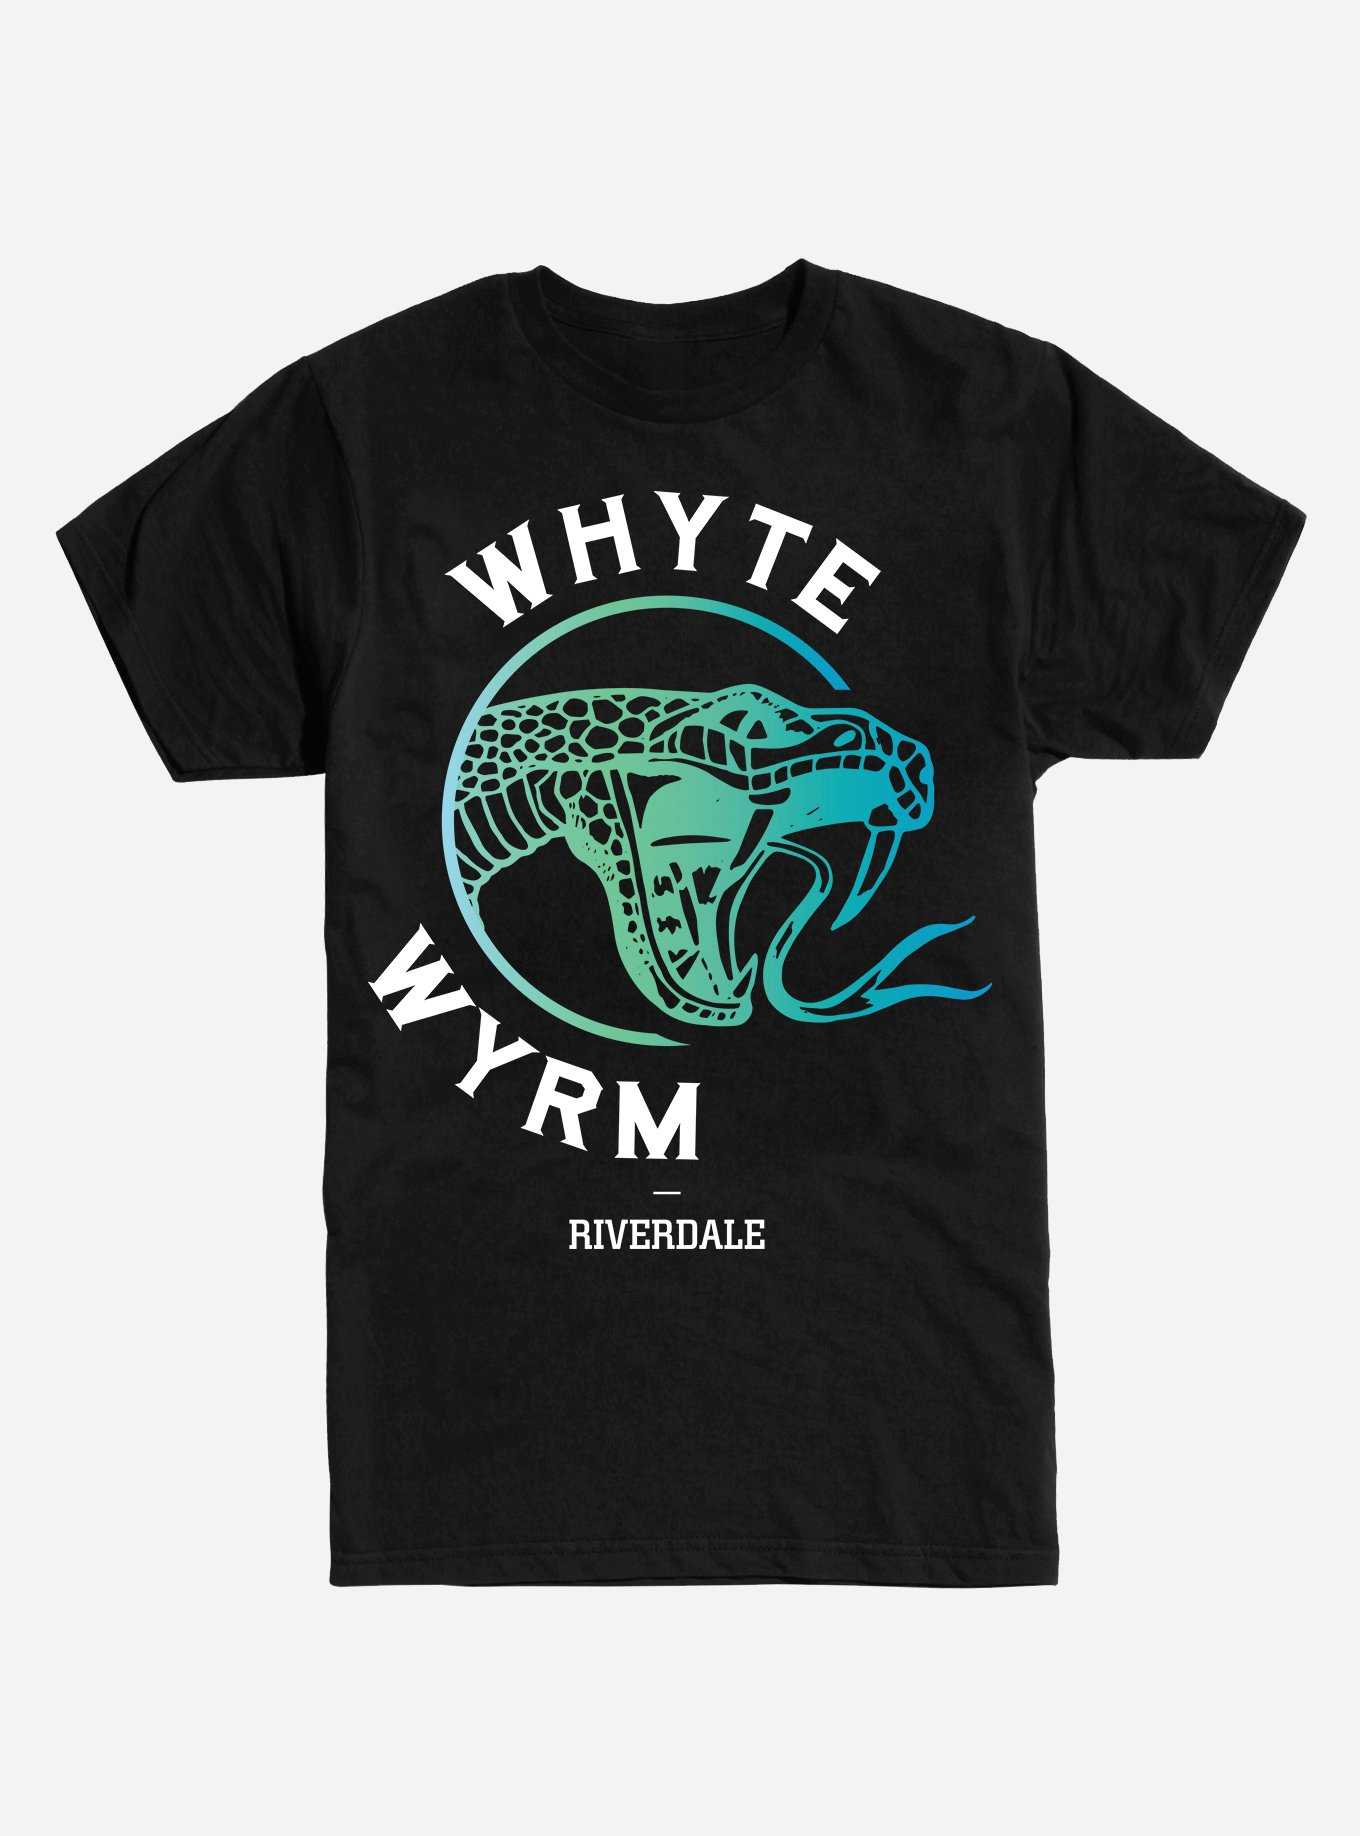 Riverdale Whyte WYRM Black T-Shirt, , hi-res